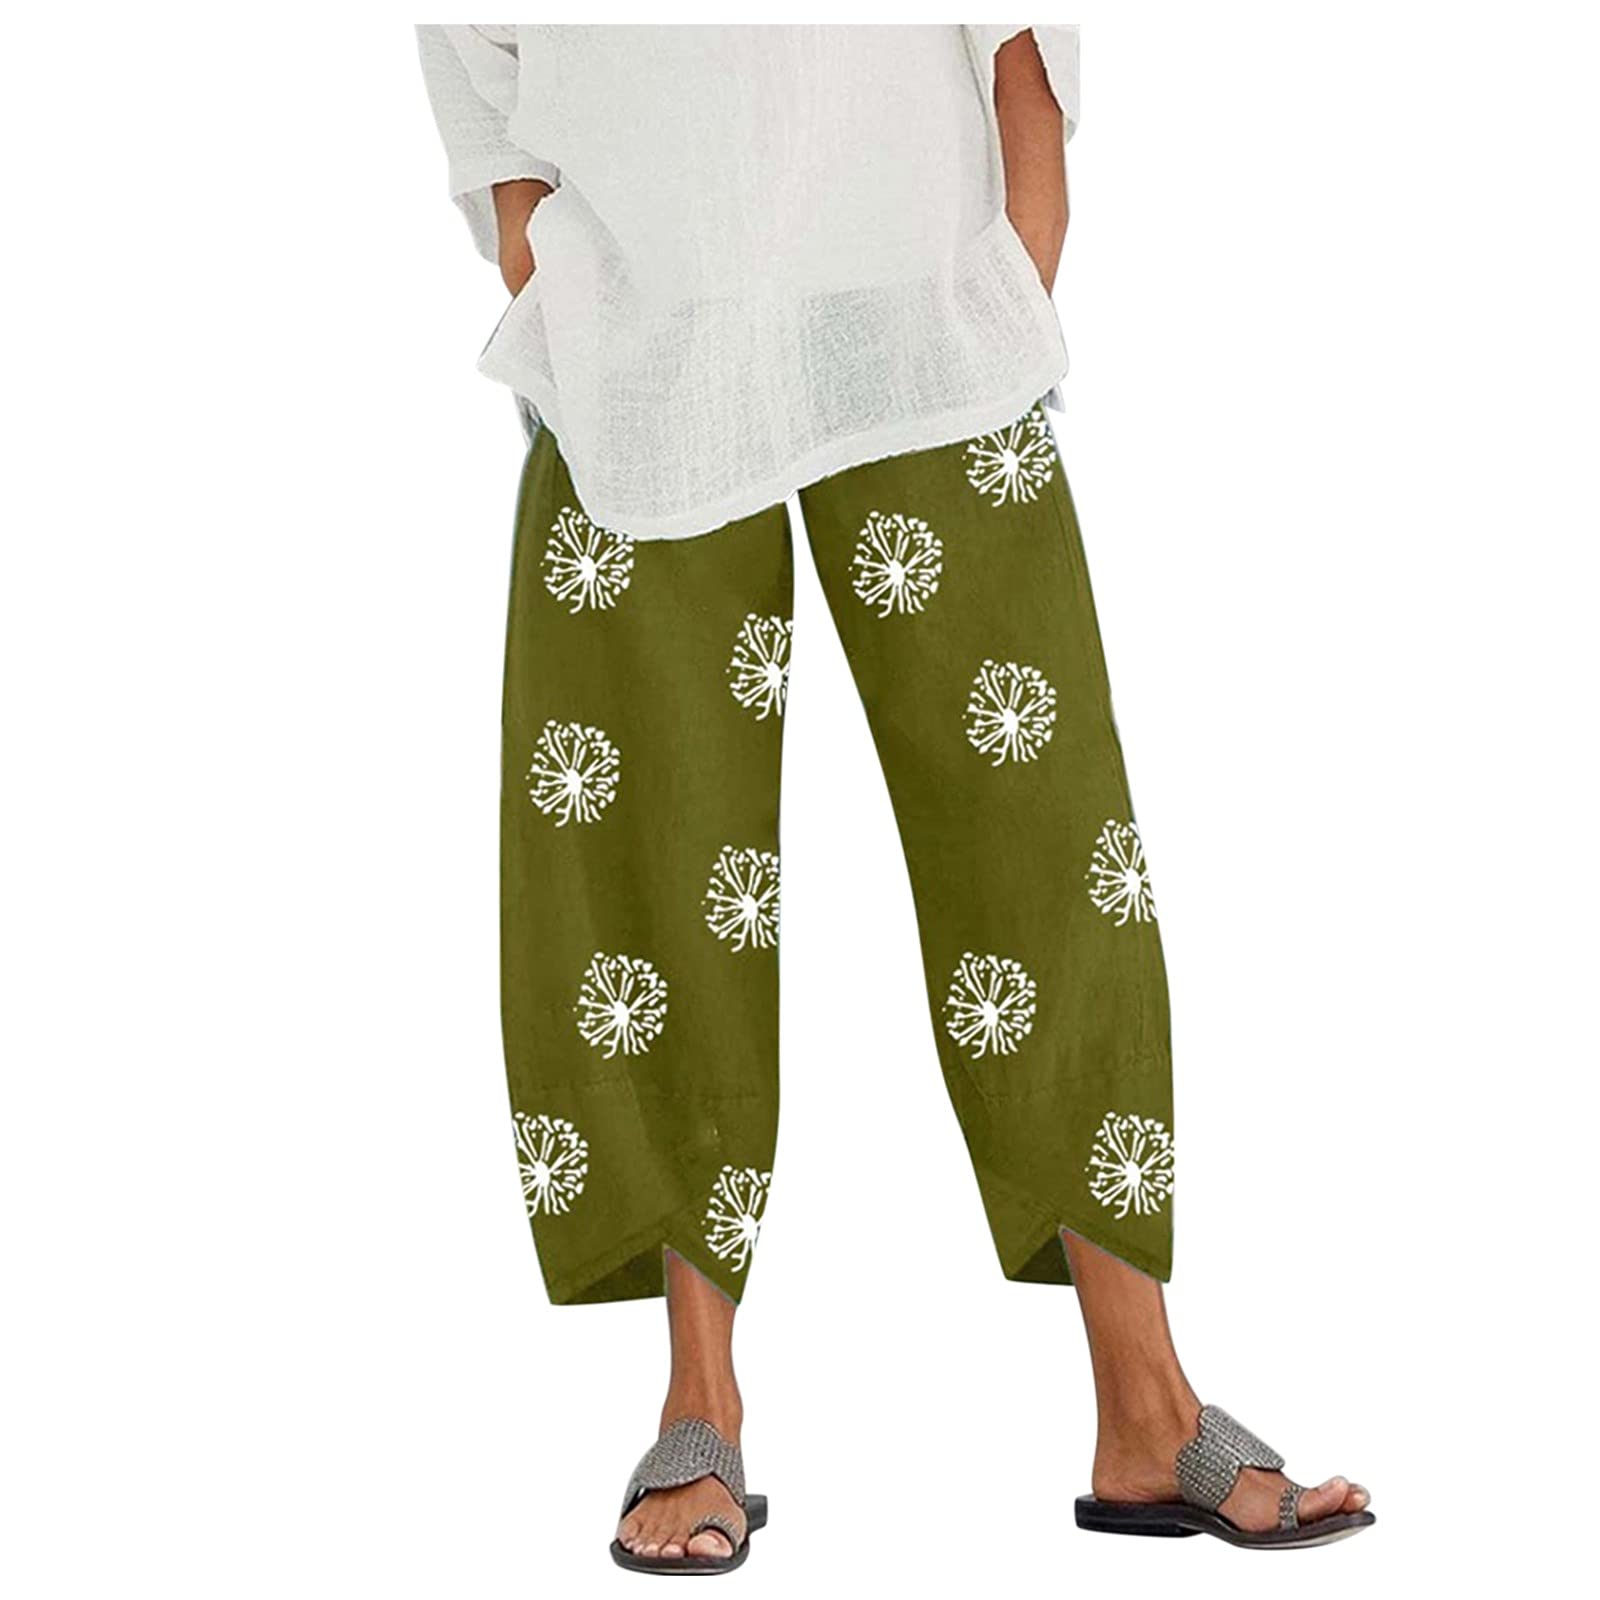 Women's capri pants made of cotton - Ocean Spirit Oy Ab